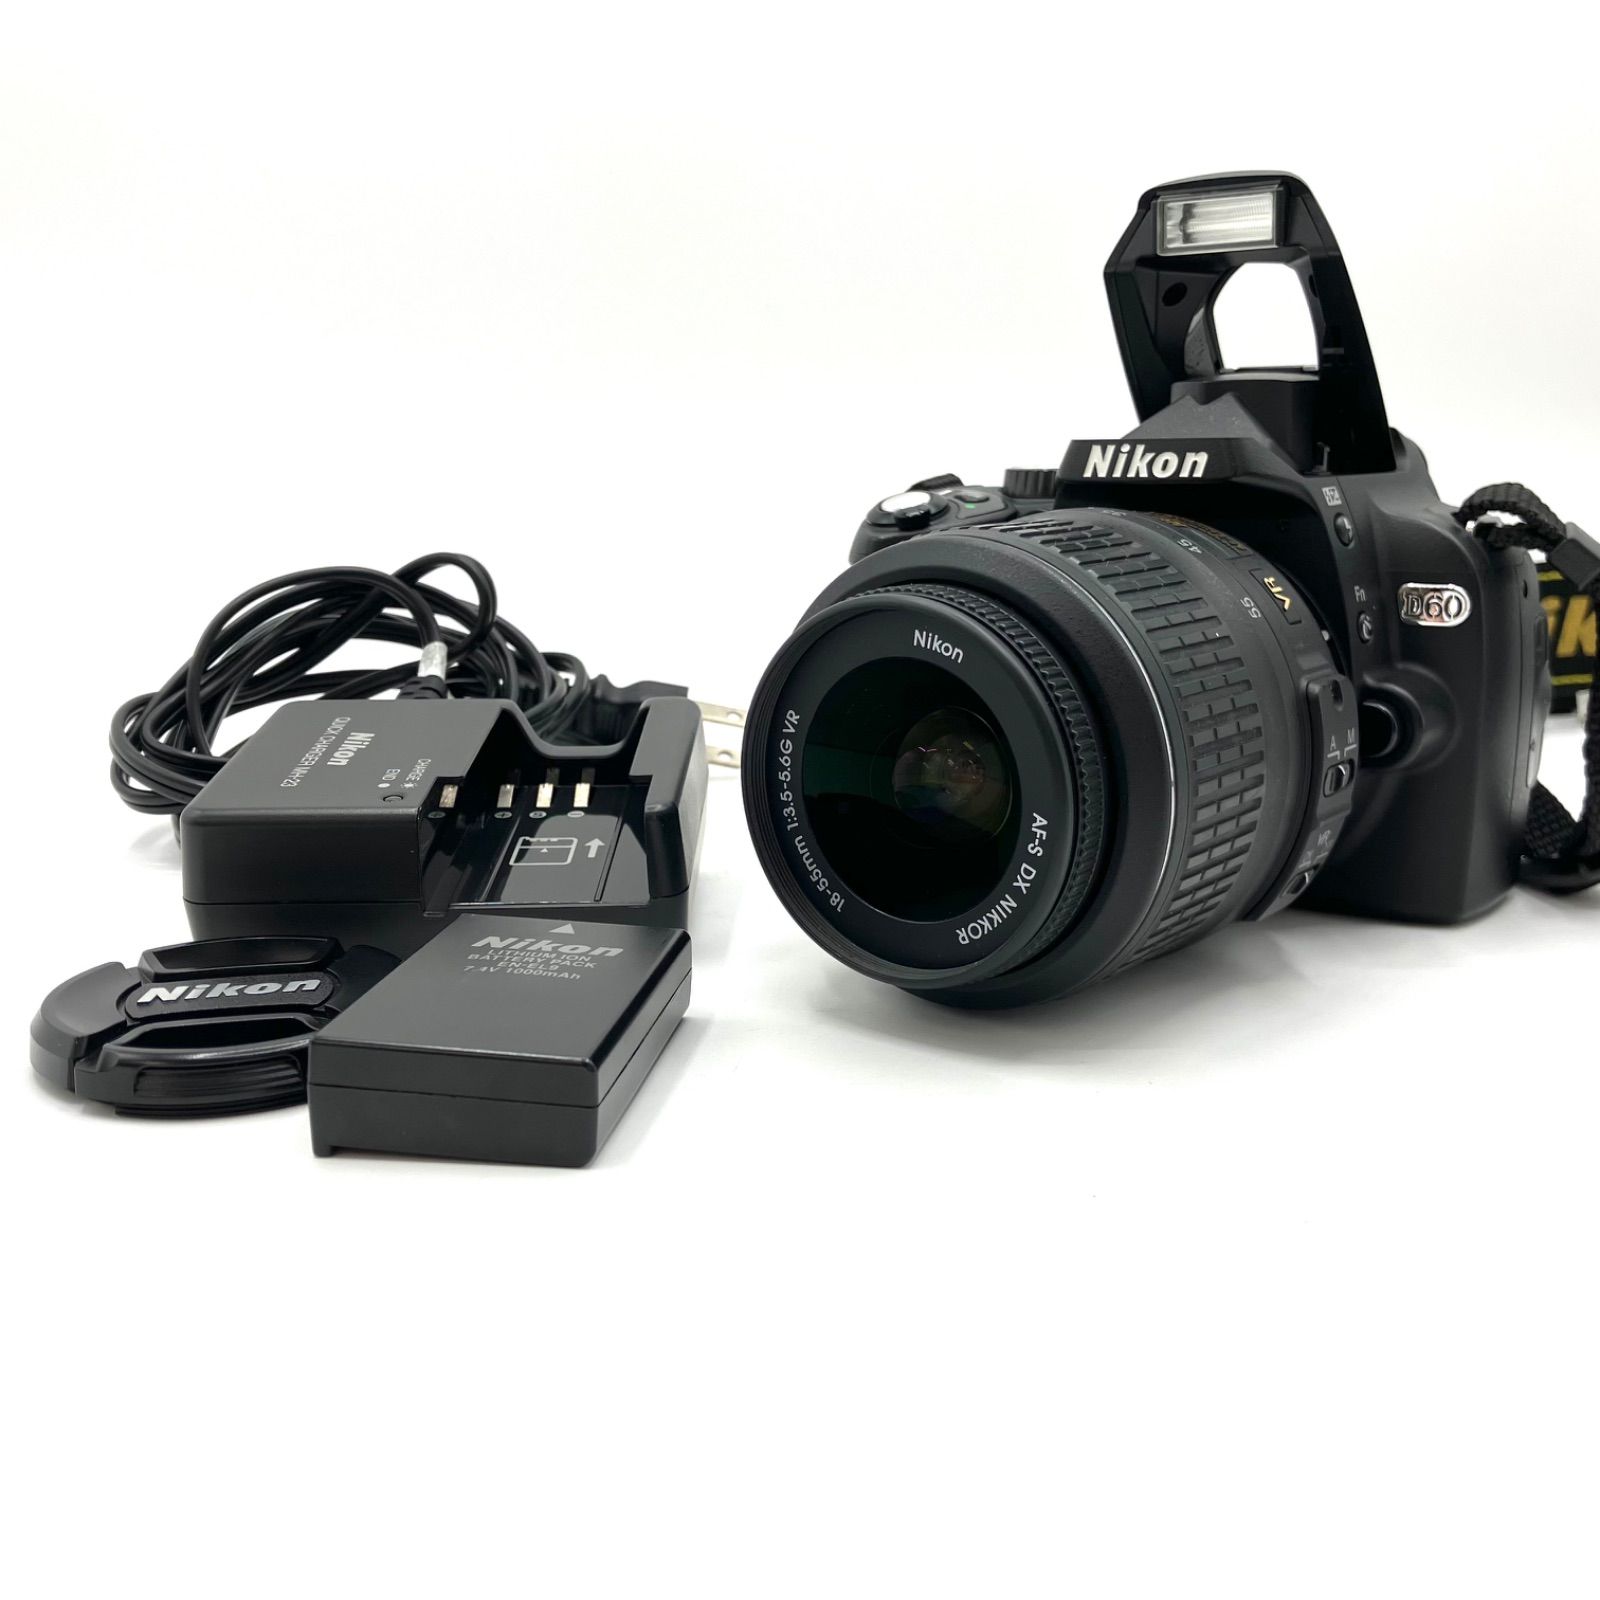 Nikon D60 - デジタルカメラ